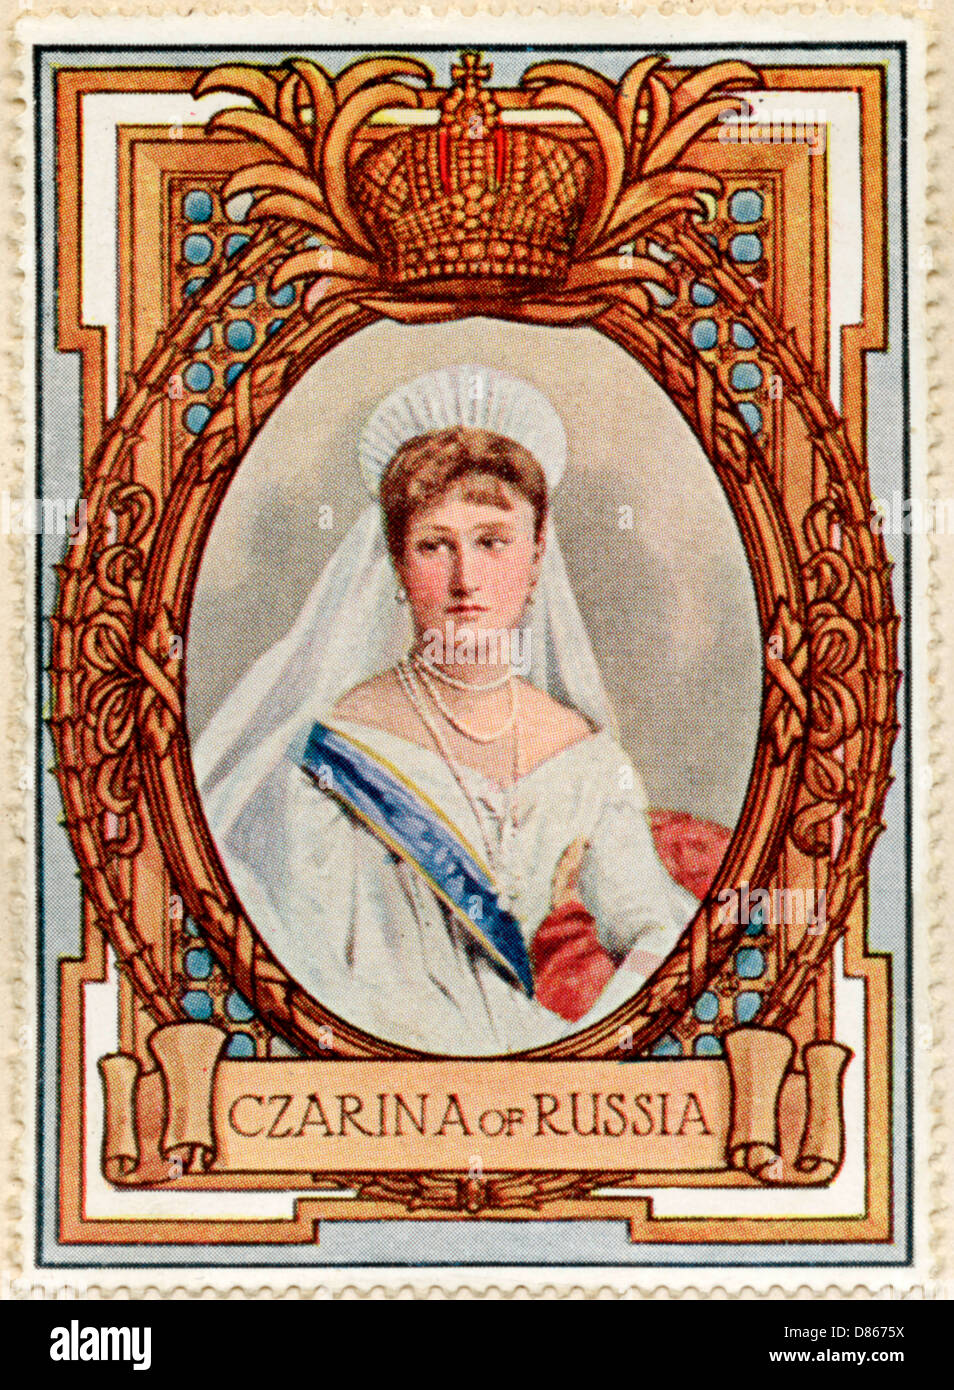 Czarina of Russia / Stamp Stock Photo